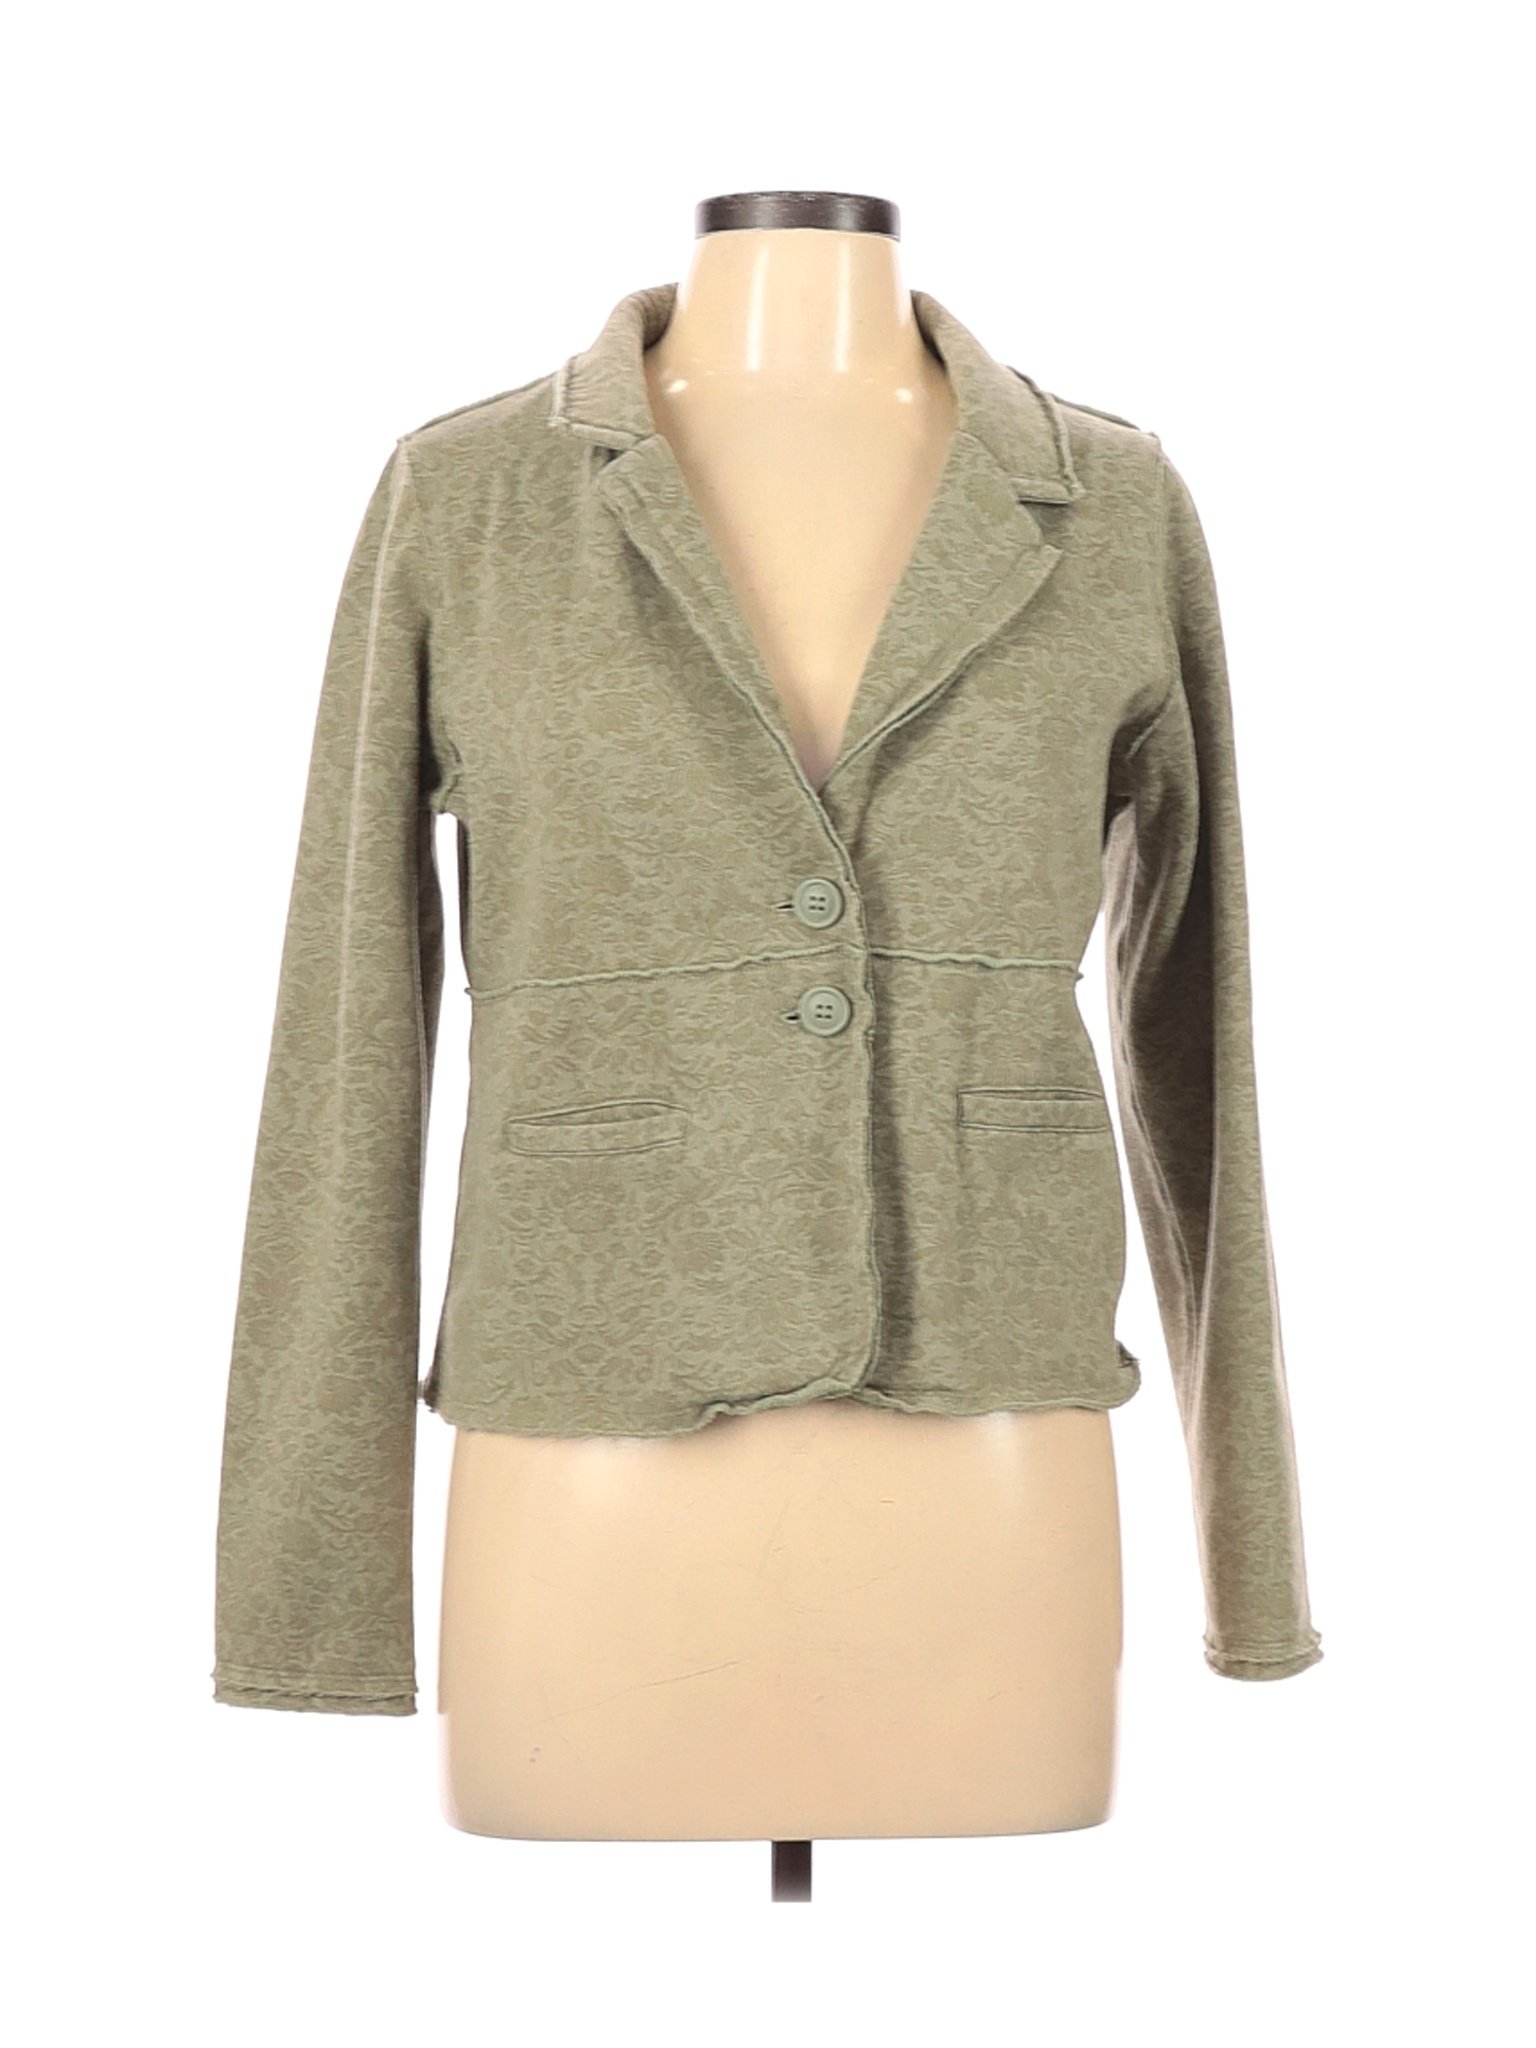 Ruff Hewn Women Green Jacket L | eBay